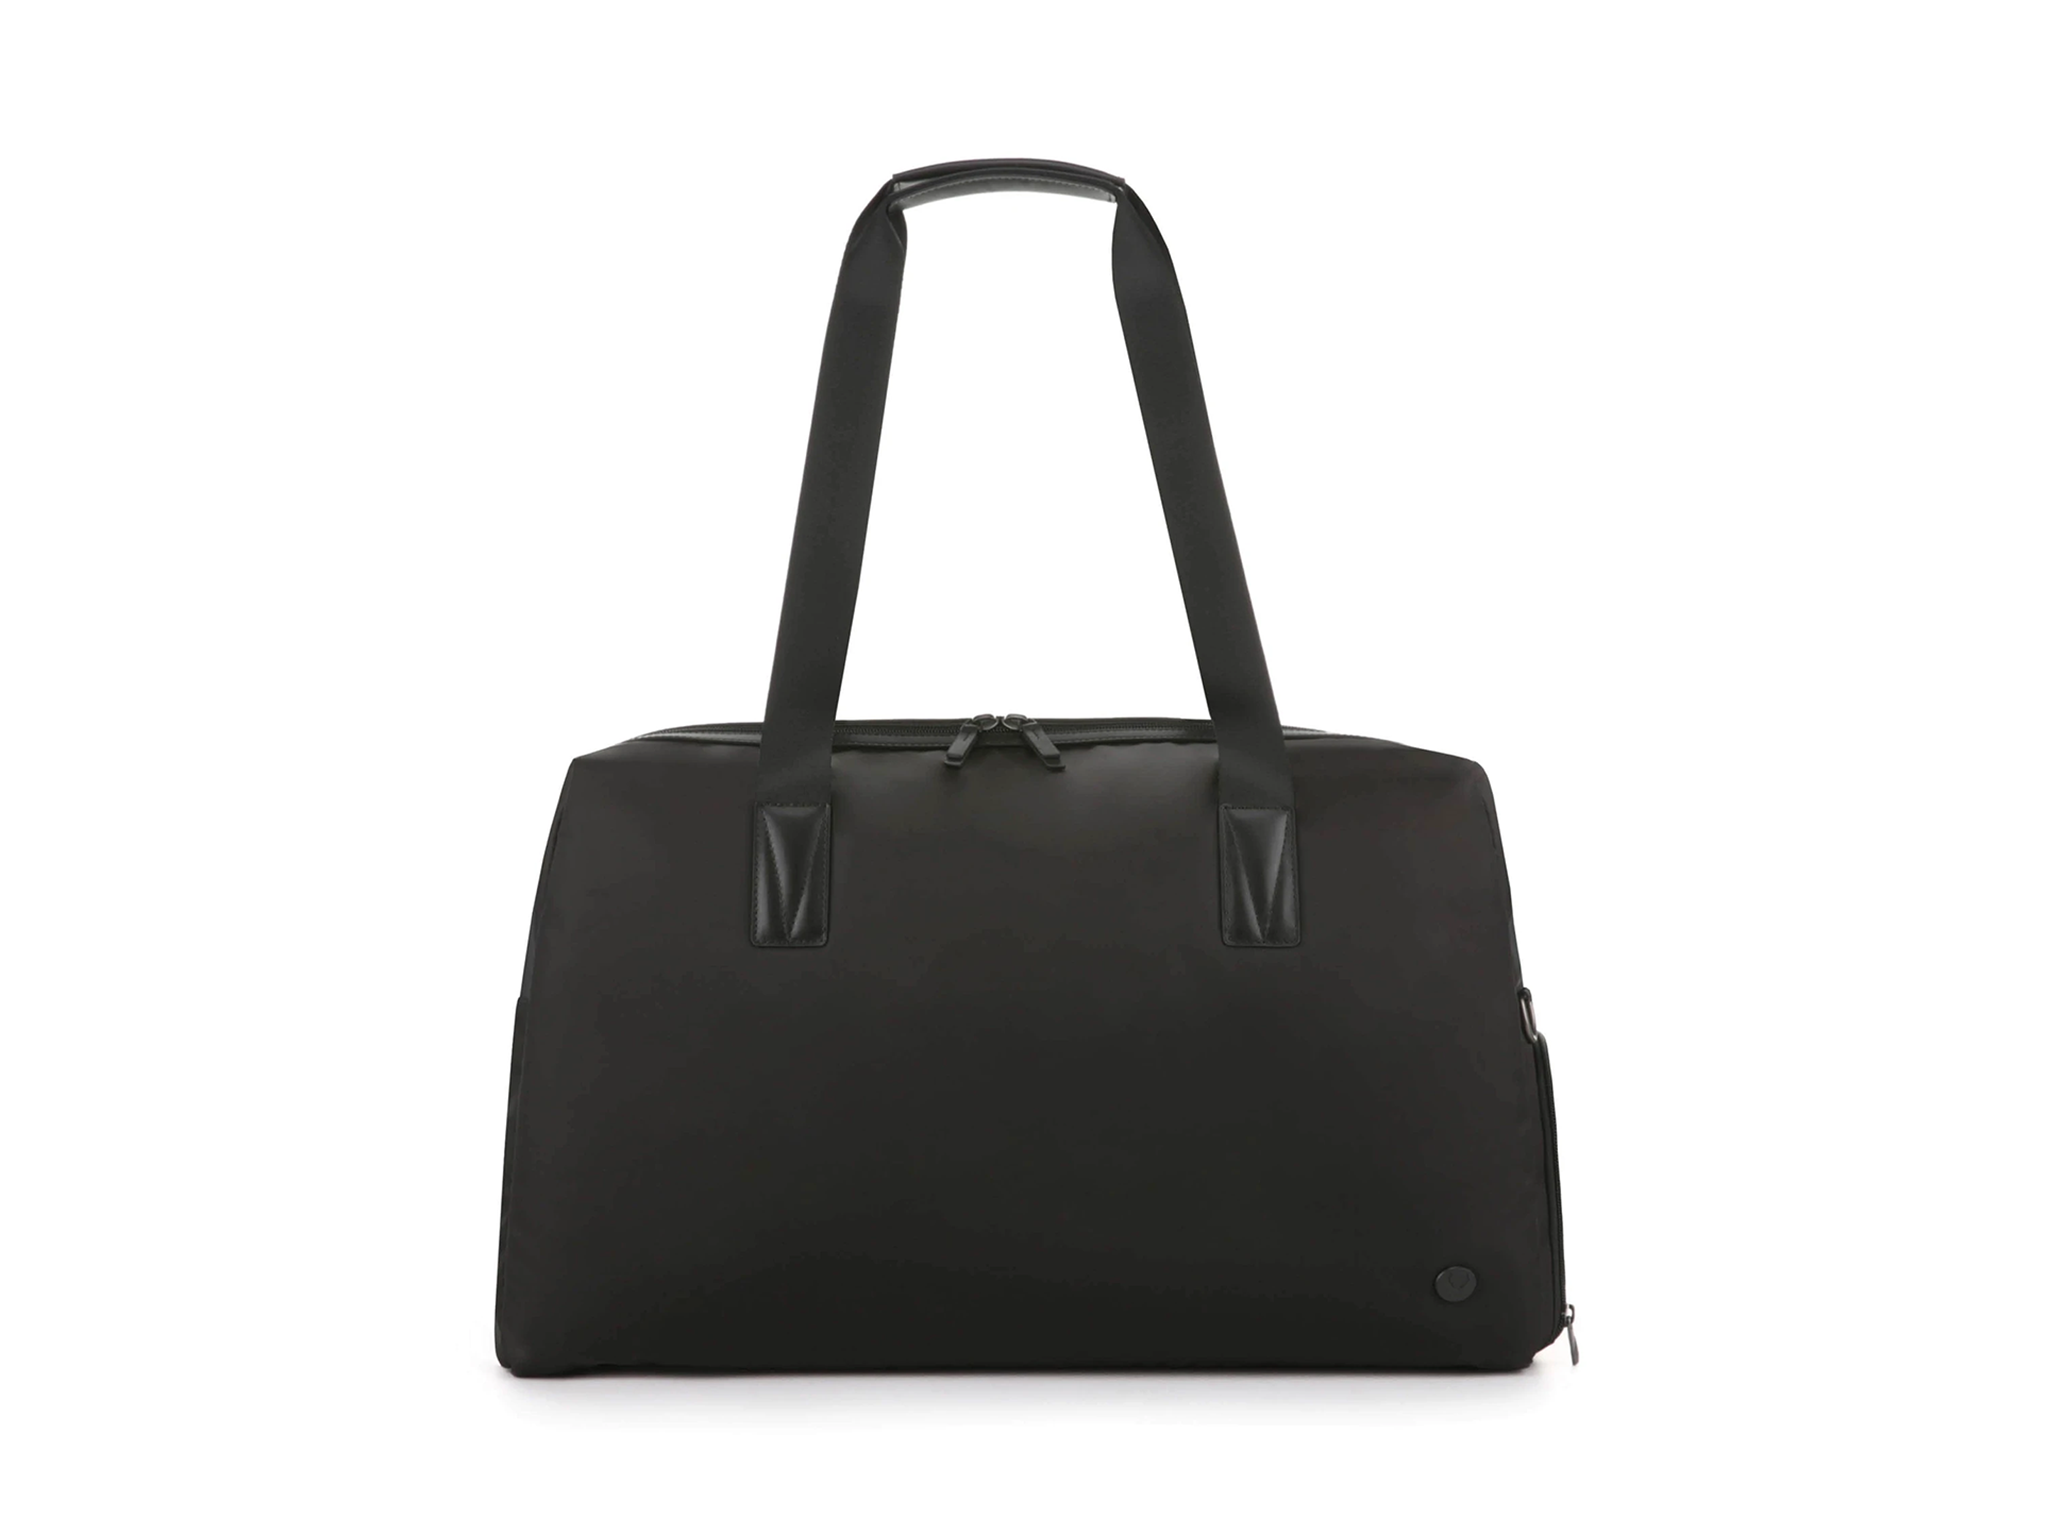 UK London Womens Small Tote Bag Handbag Purse for Travel Work School Shopping 